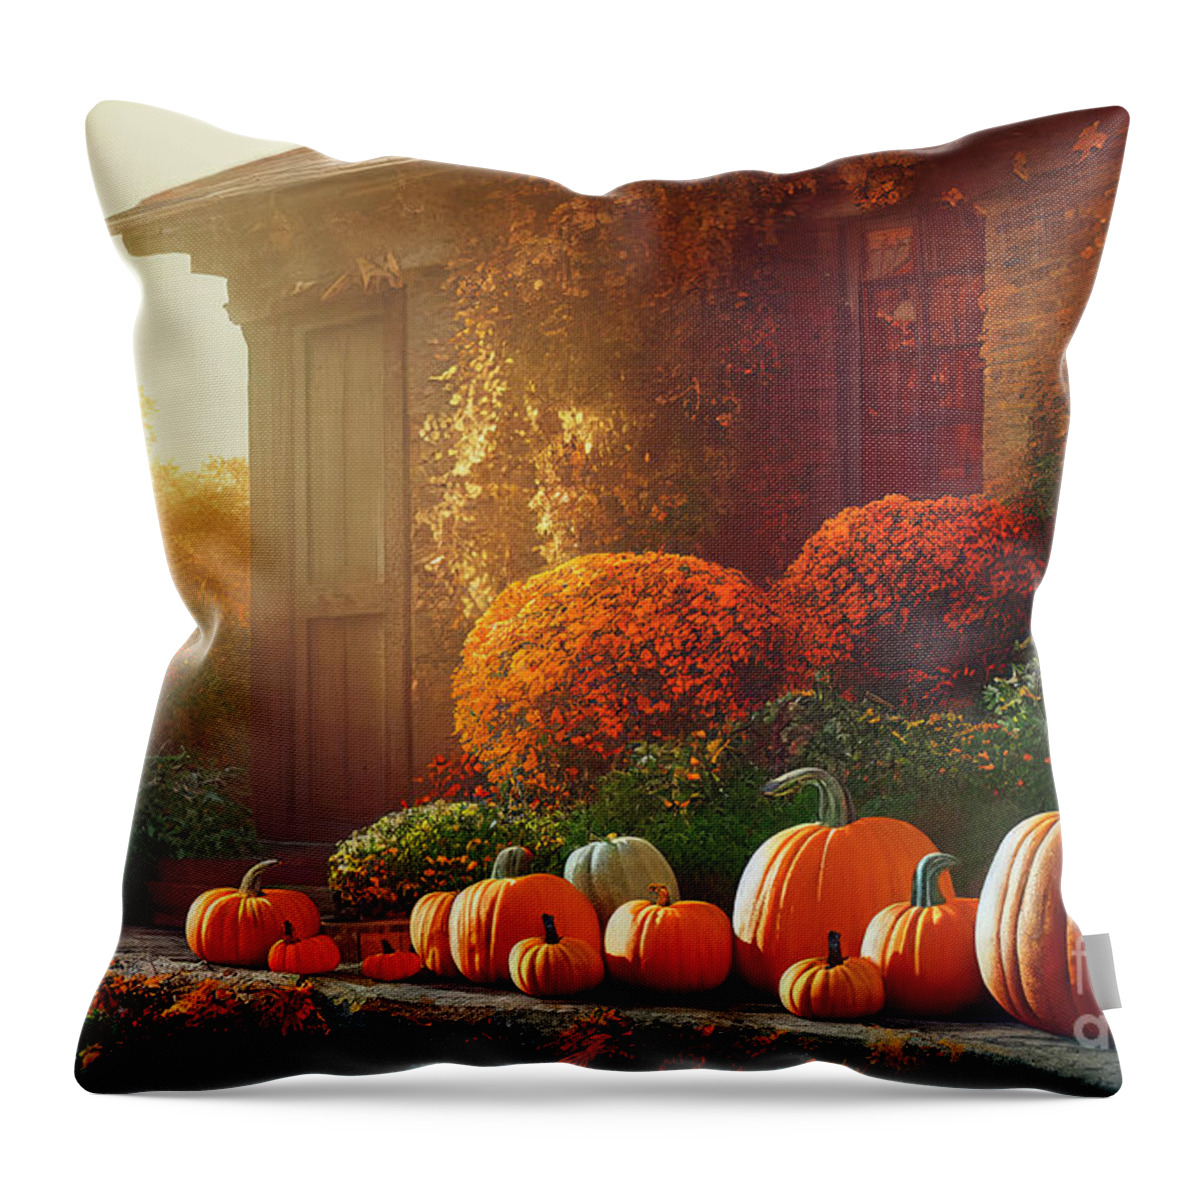 Thanksgiving Throw Pillow featuring the digital art Autumn pumpkins decoration in home garden. Traditional thanksgiv by Jelena Jovanovic